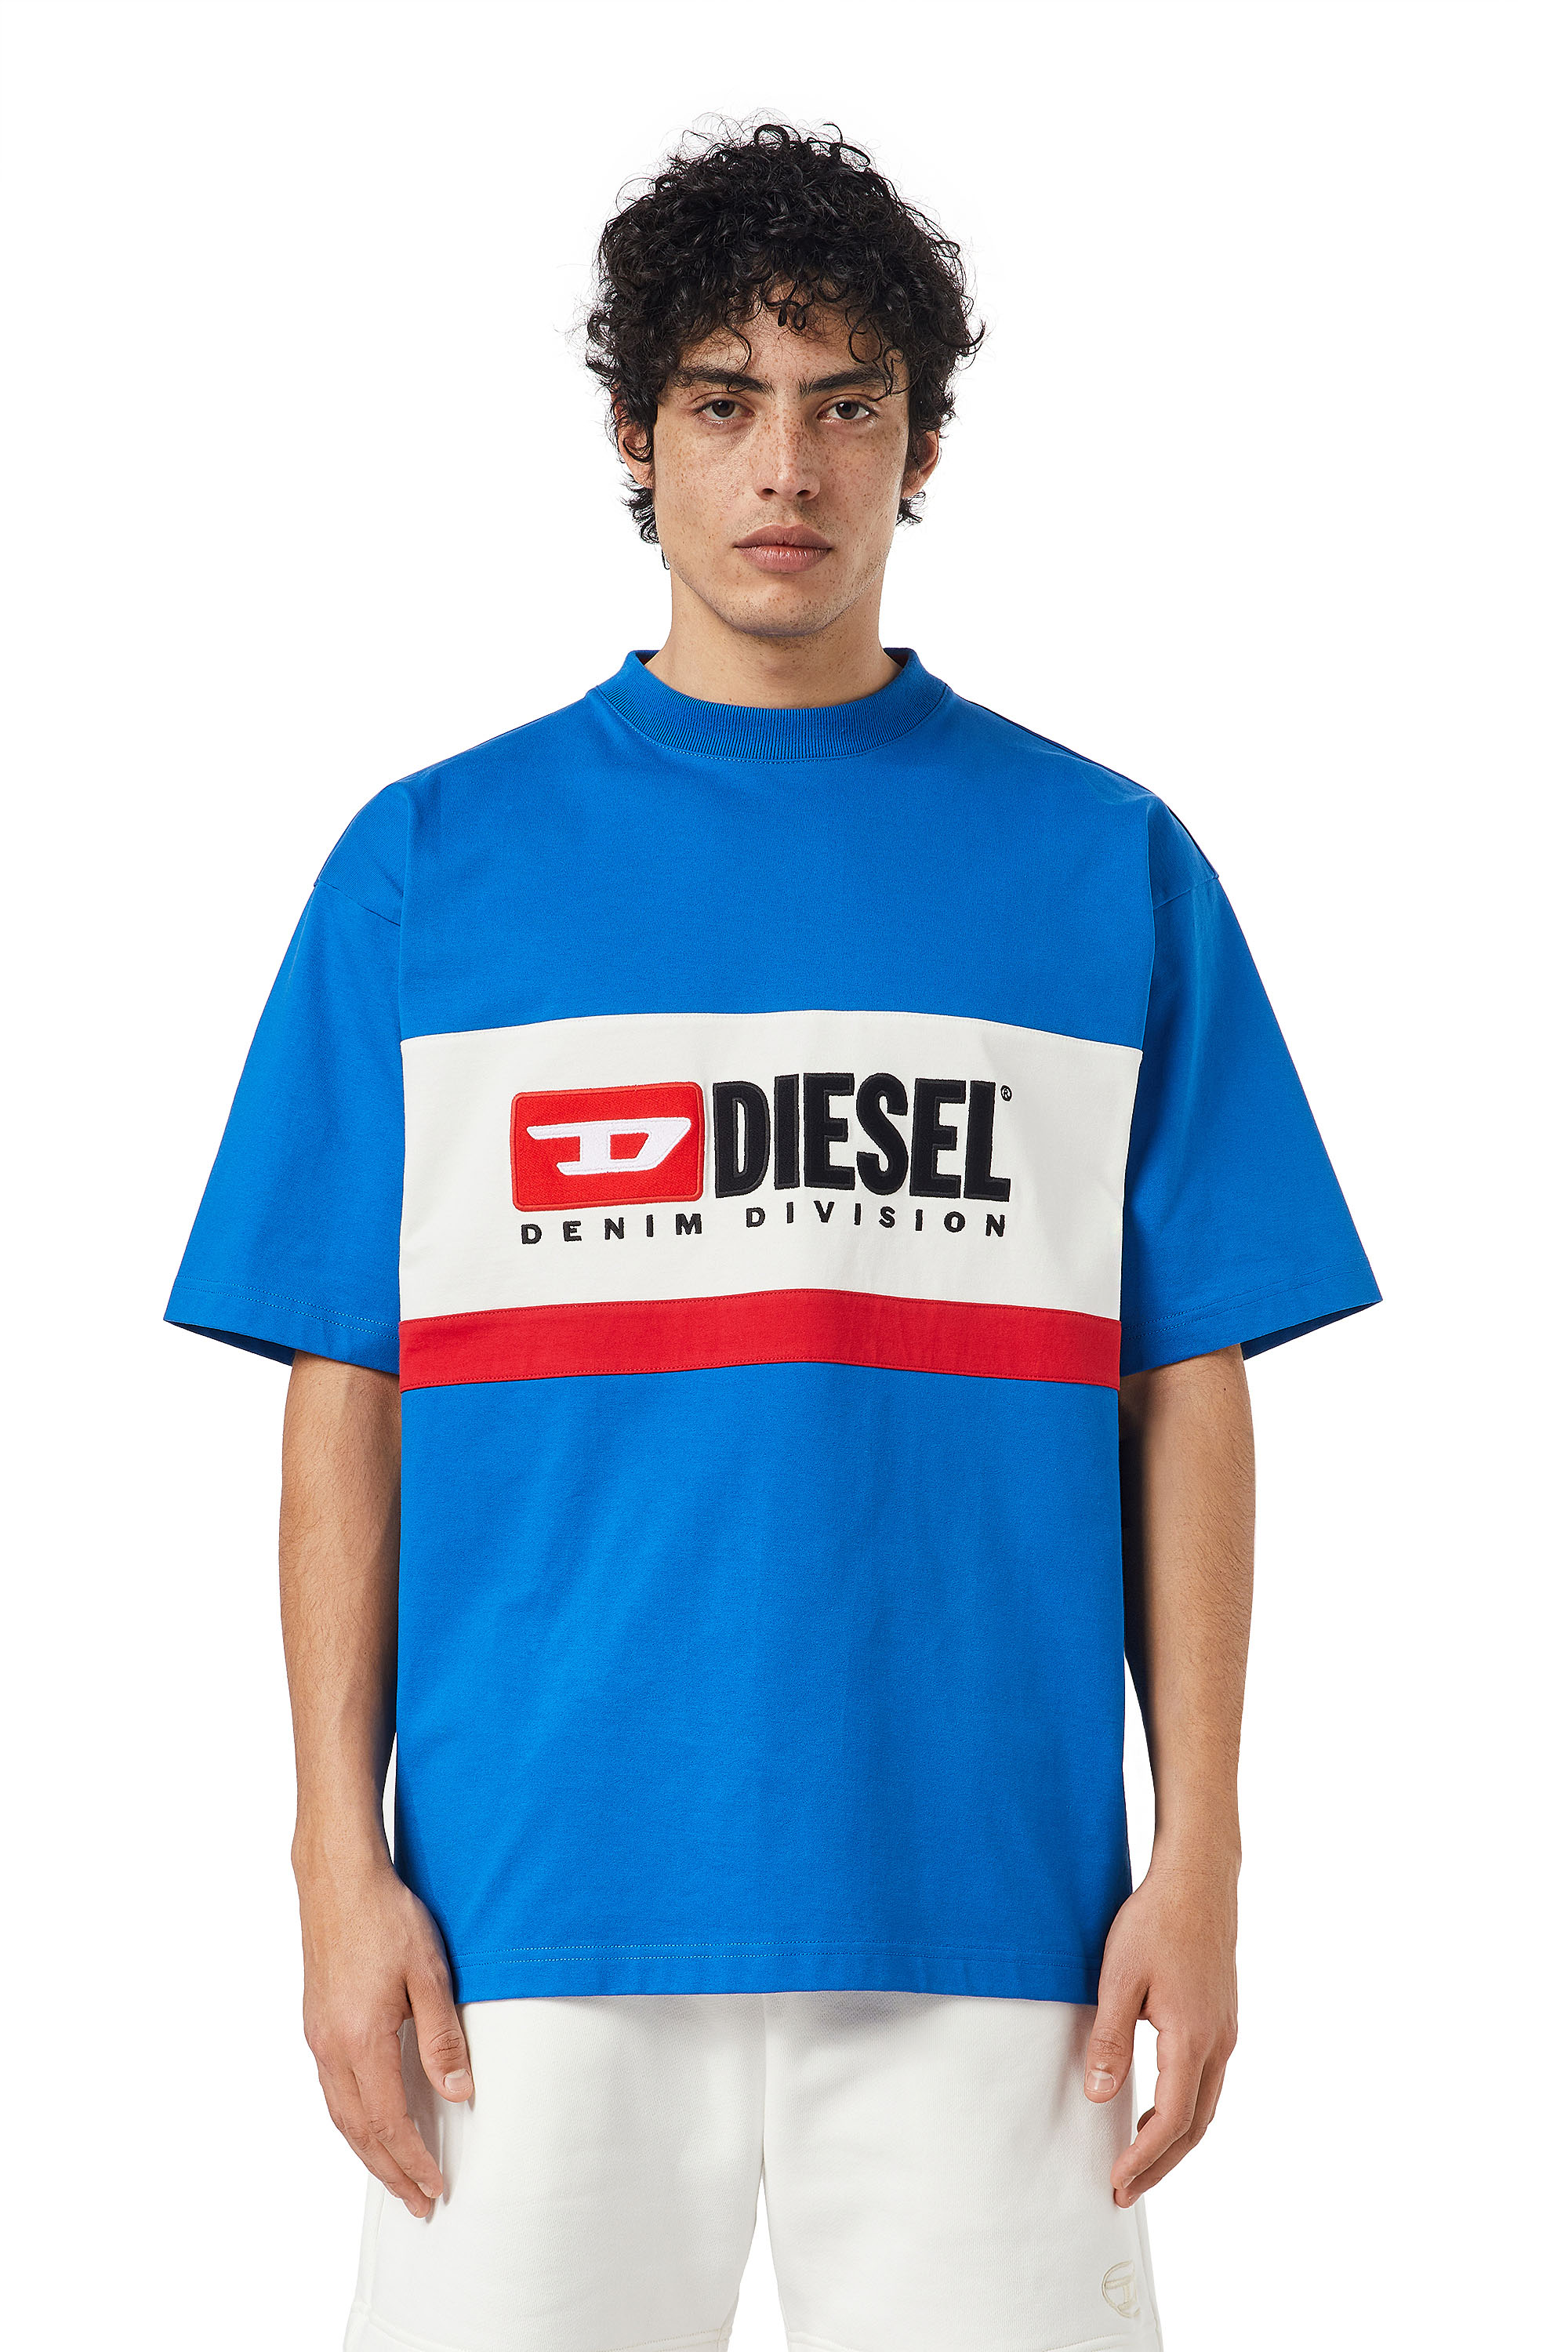 Diesel - T-STREAP-DIVISION, Blue - Image 1